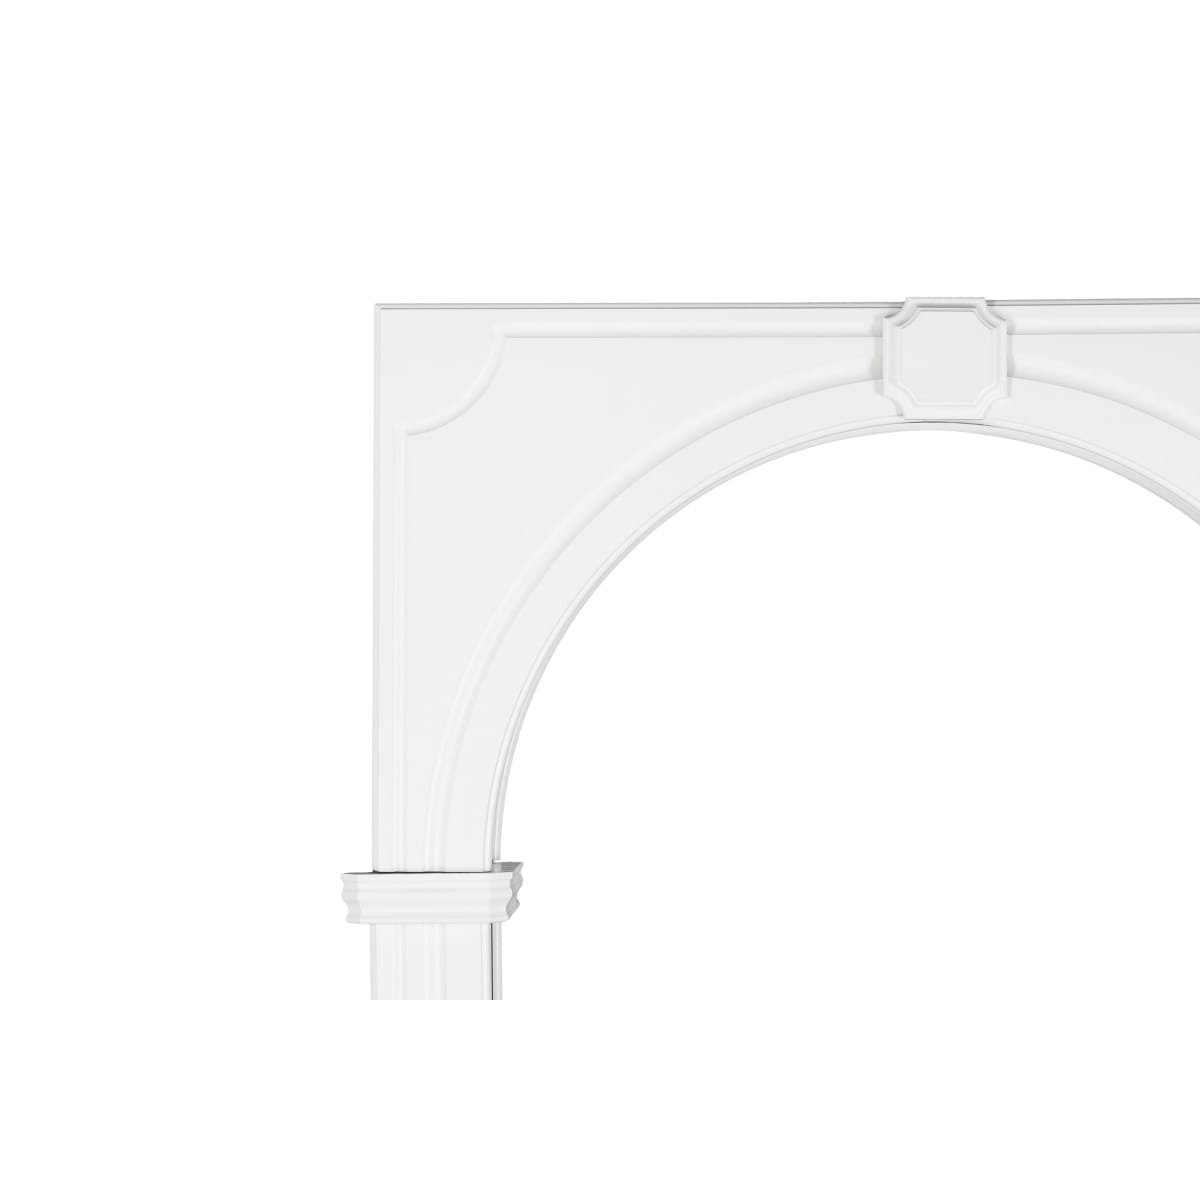 Дверная арка леруа мерлен. Арка "Палермо", белый. Арка Палермо белая Леруа Мерлен. Арка Палермо белая эмаль. Межкомнатные арки в Леруа.